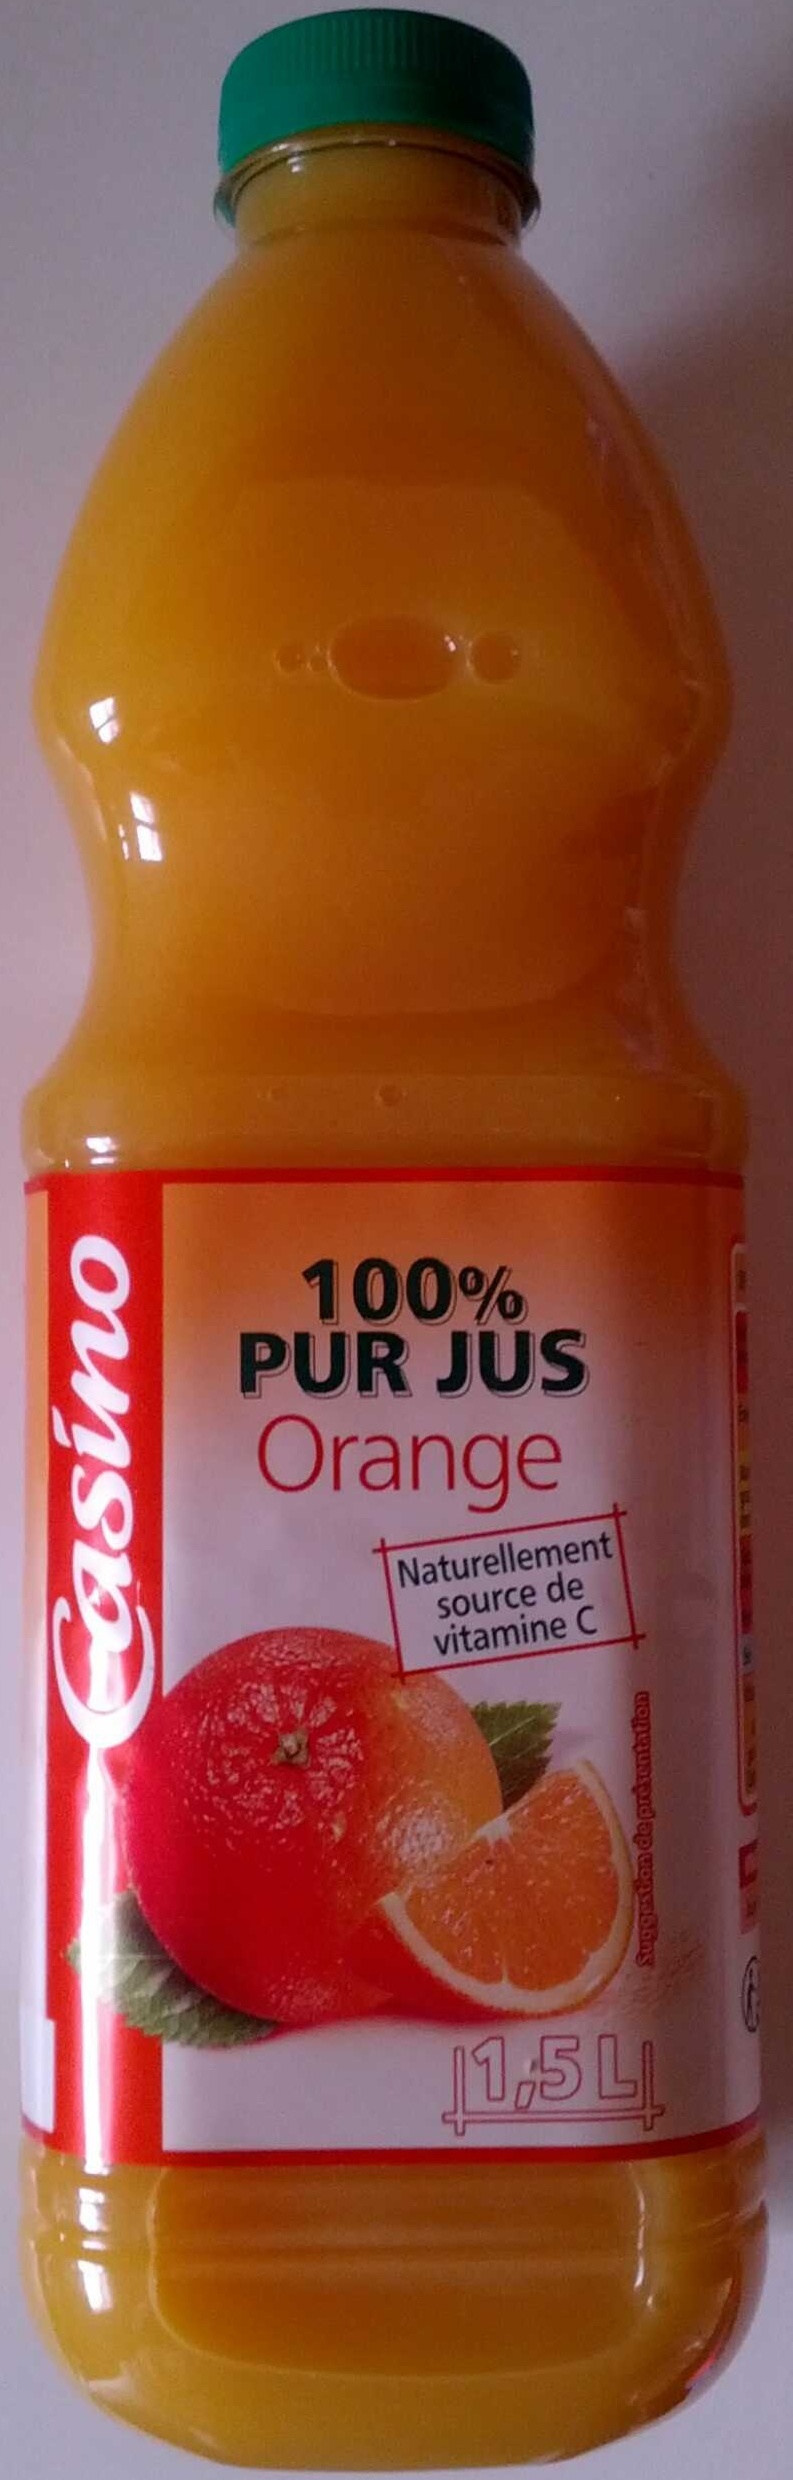 100% Pur Jus Orange Naturellement source de vitamine C - Product - fr